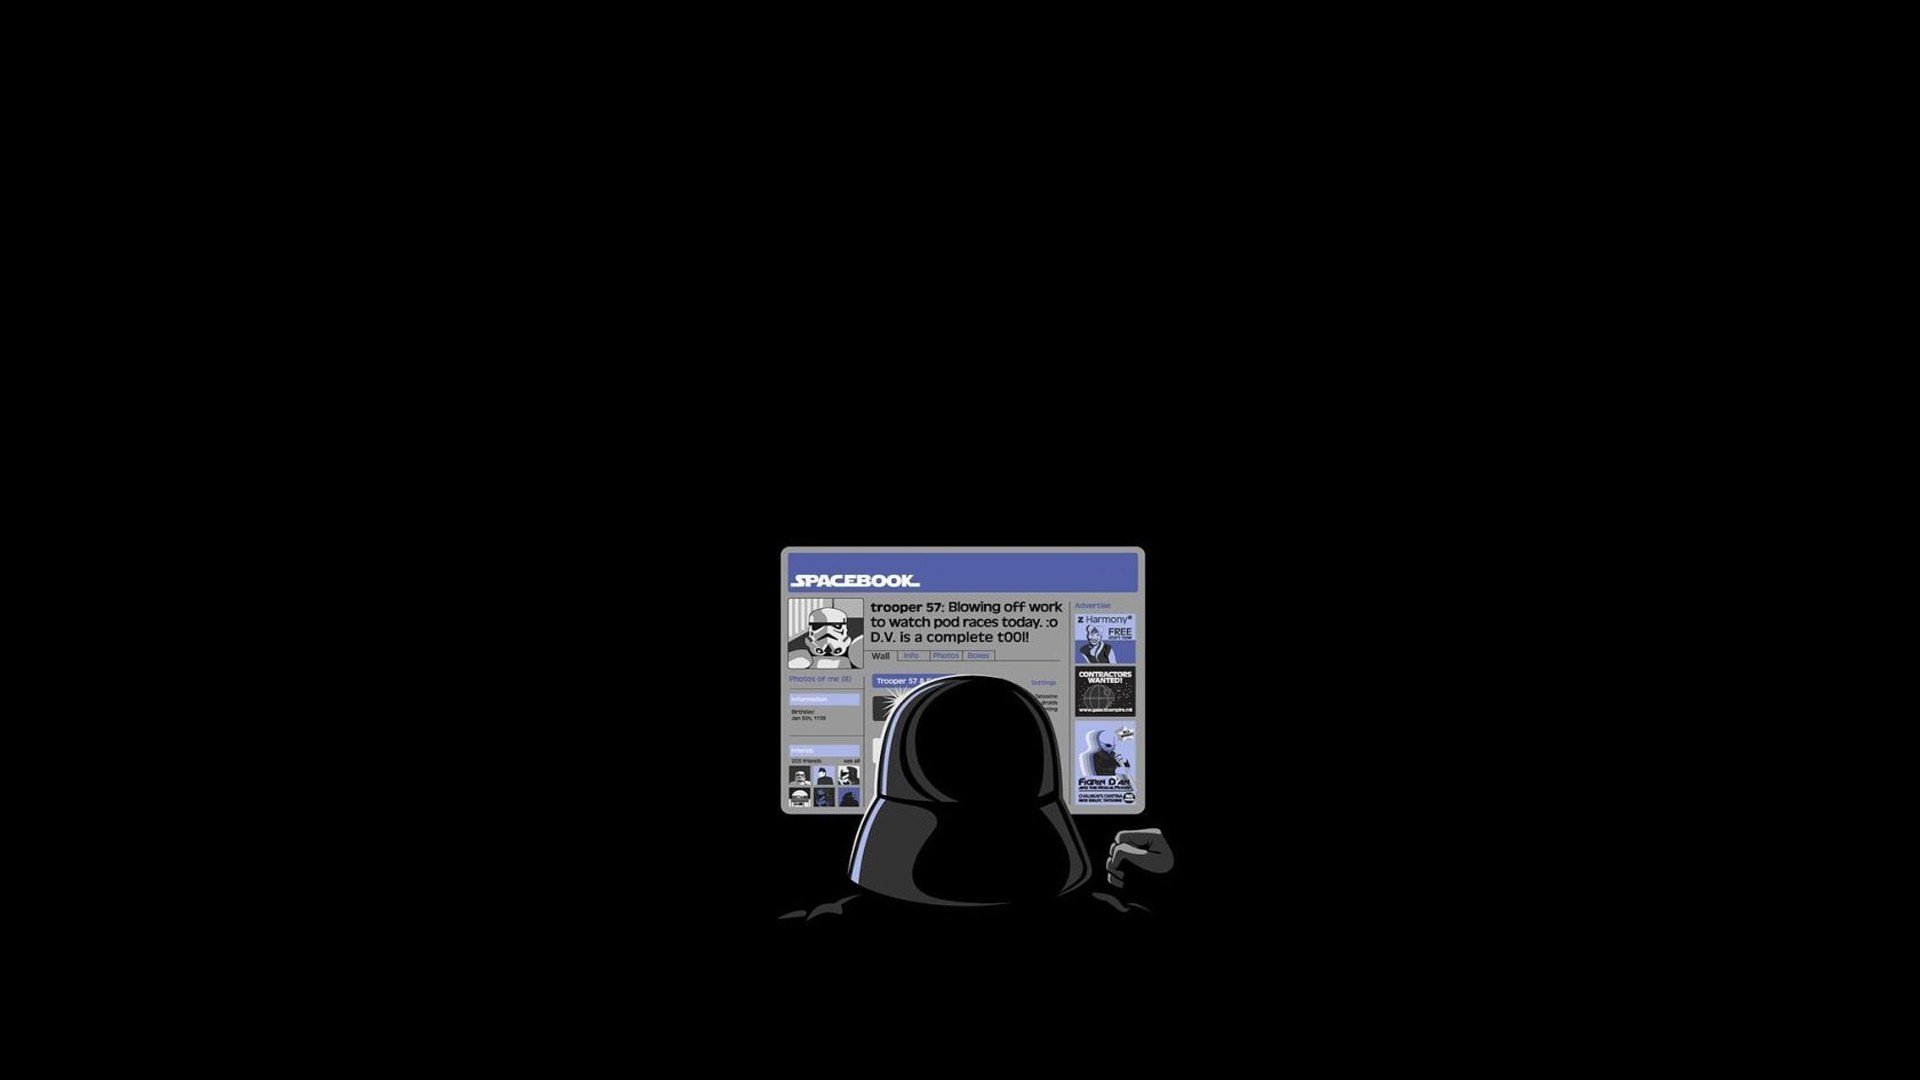 General 1920x1080 Star Wars Darth Vader Facebook humor minimalism simple background Star Wars Humor